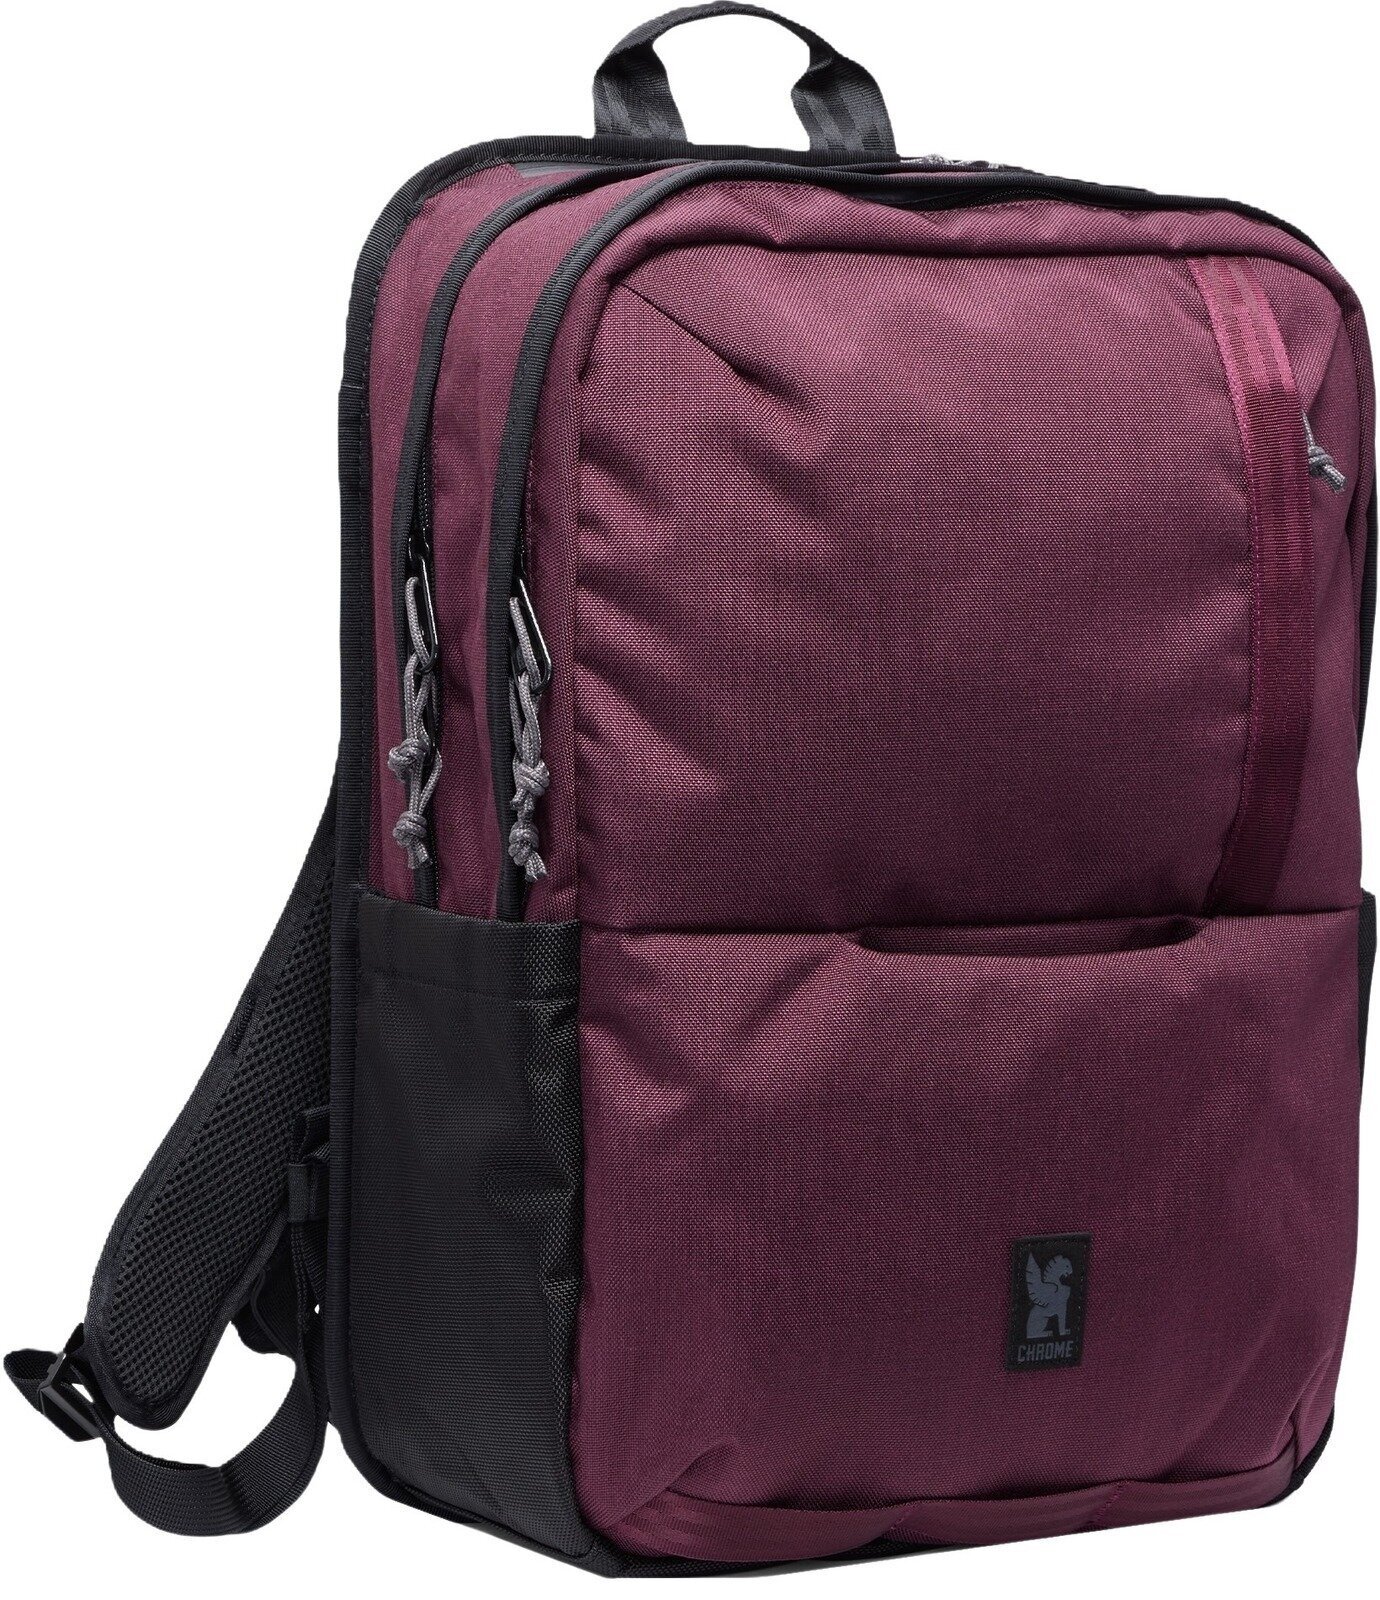 Lifestyle Backpack / Bag Chrome Hawes Backpack Royale 26 L Backpack